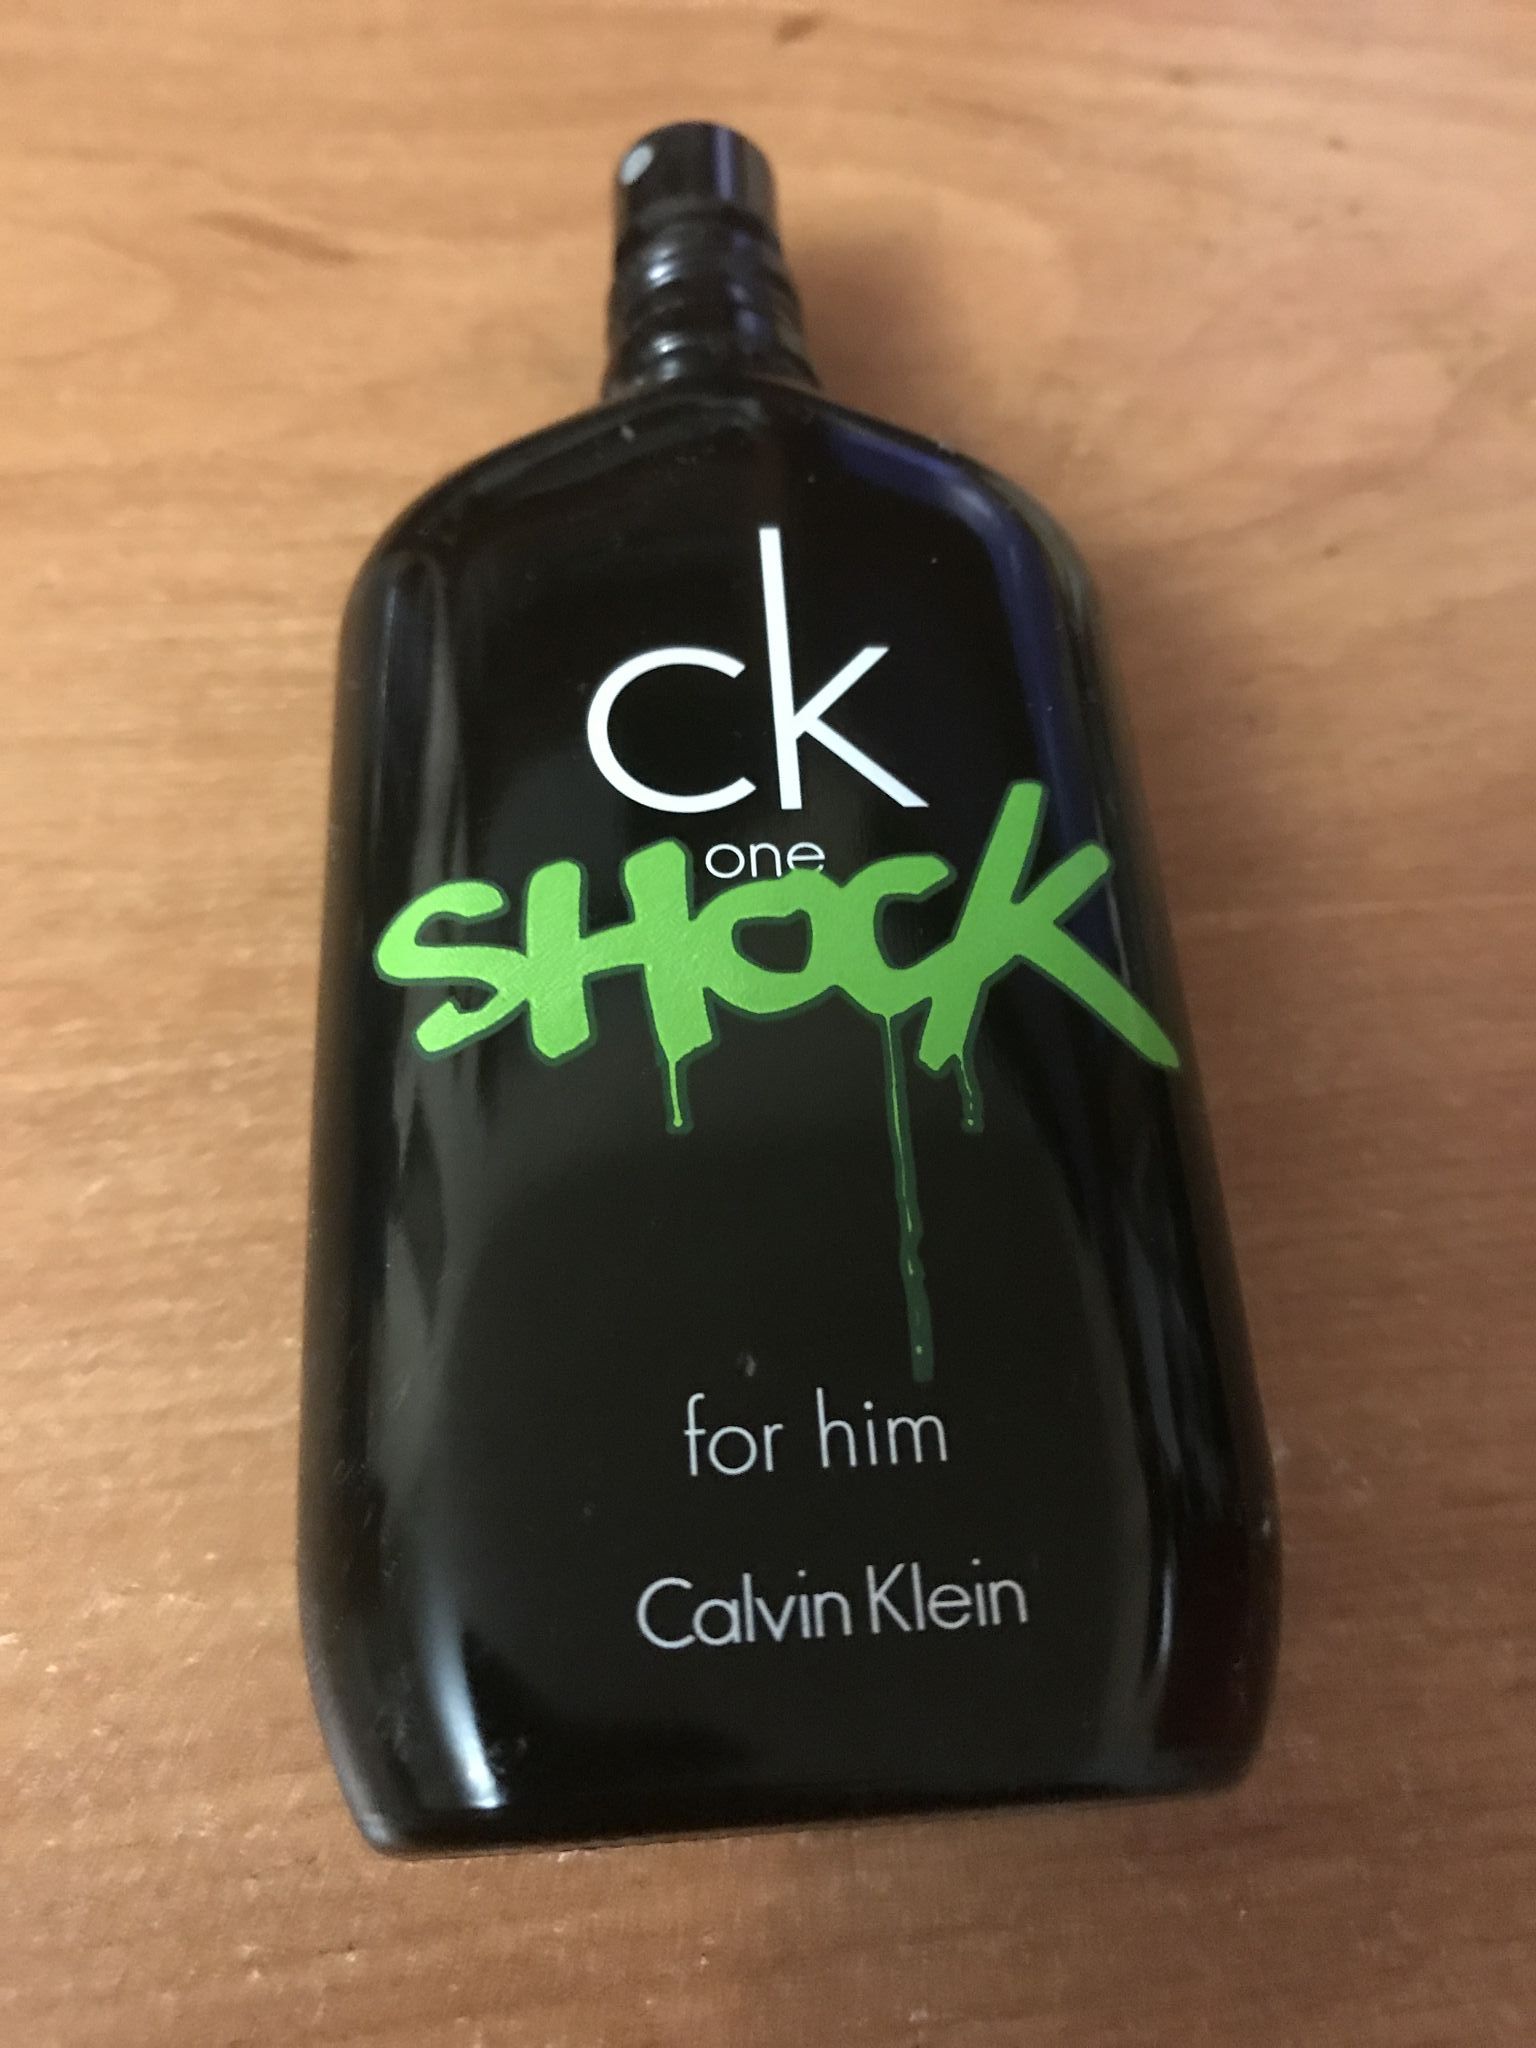 Купить ck one shock. CK one Shock for him туалетная вода 50 мл.